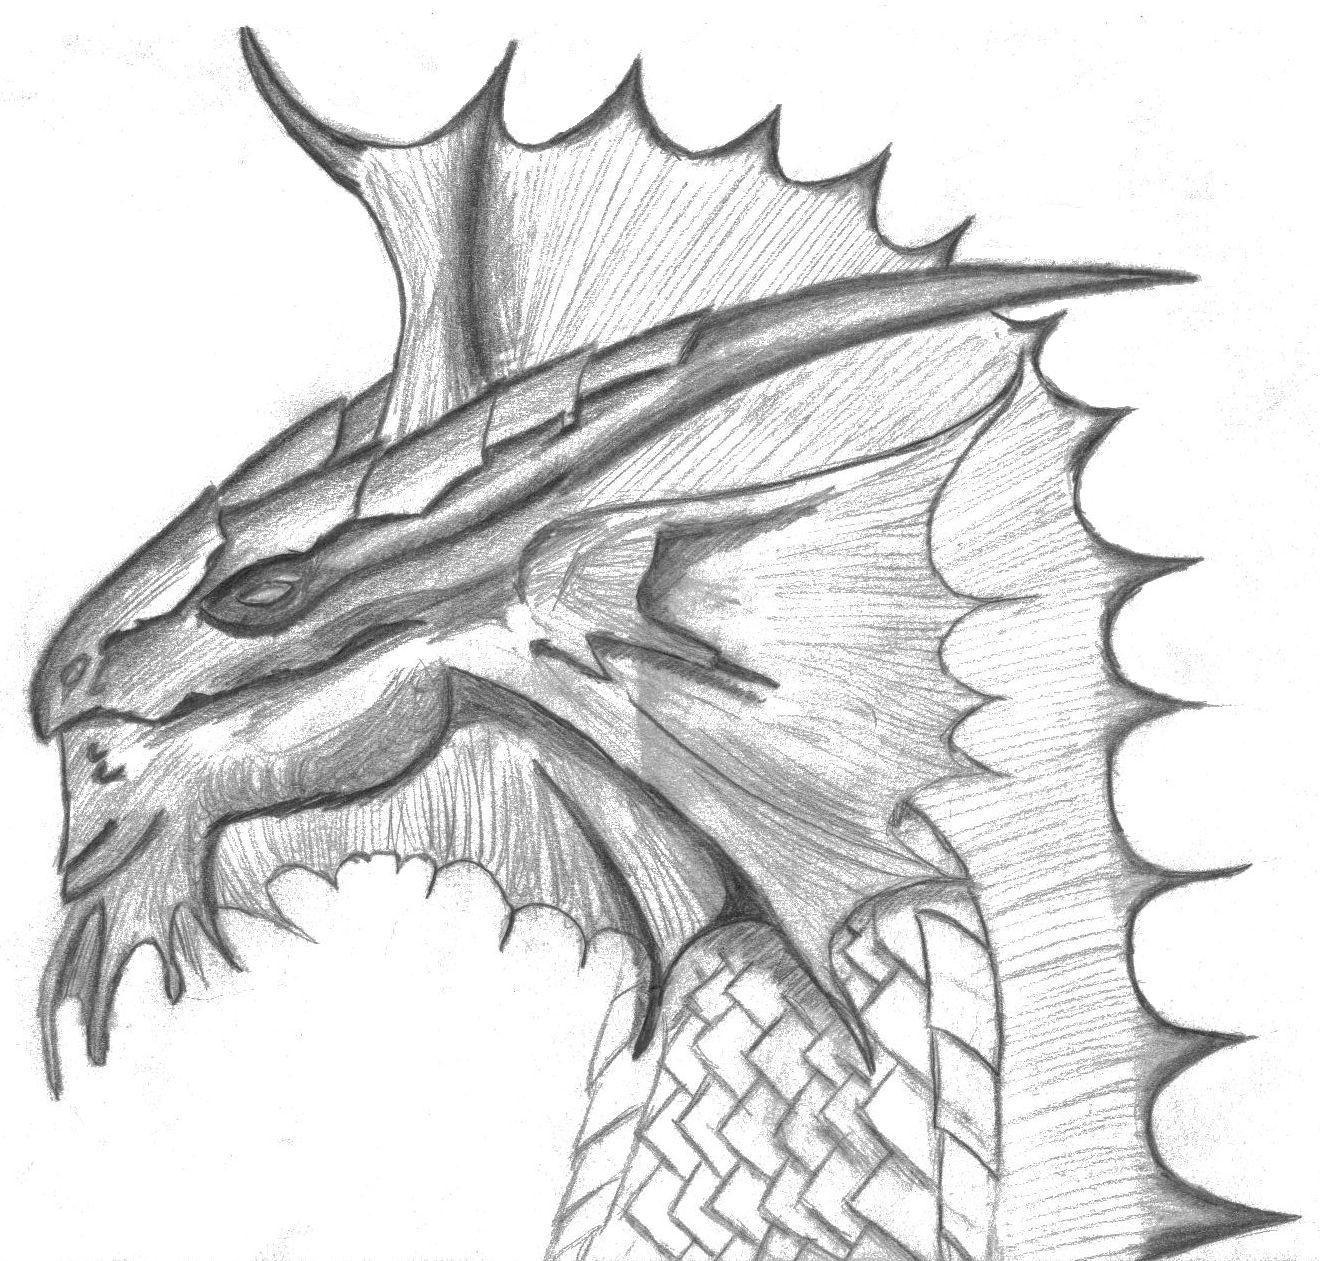 Silver dragon head by ultharwe on DeviantArt